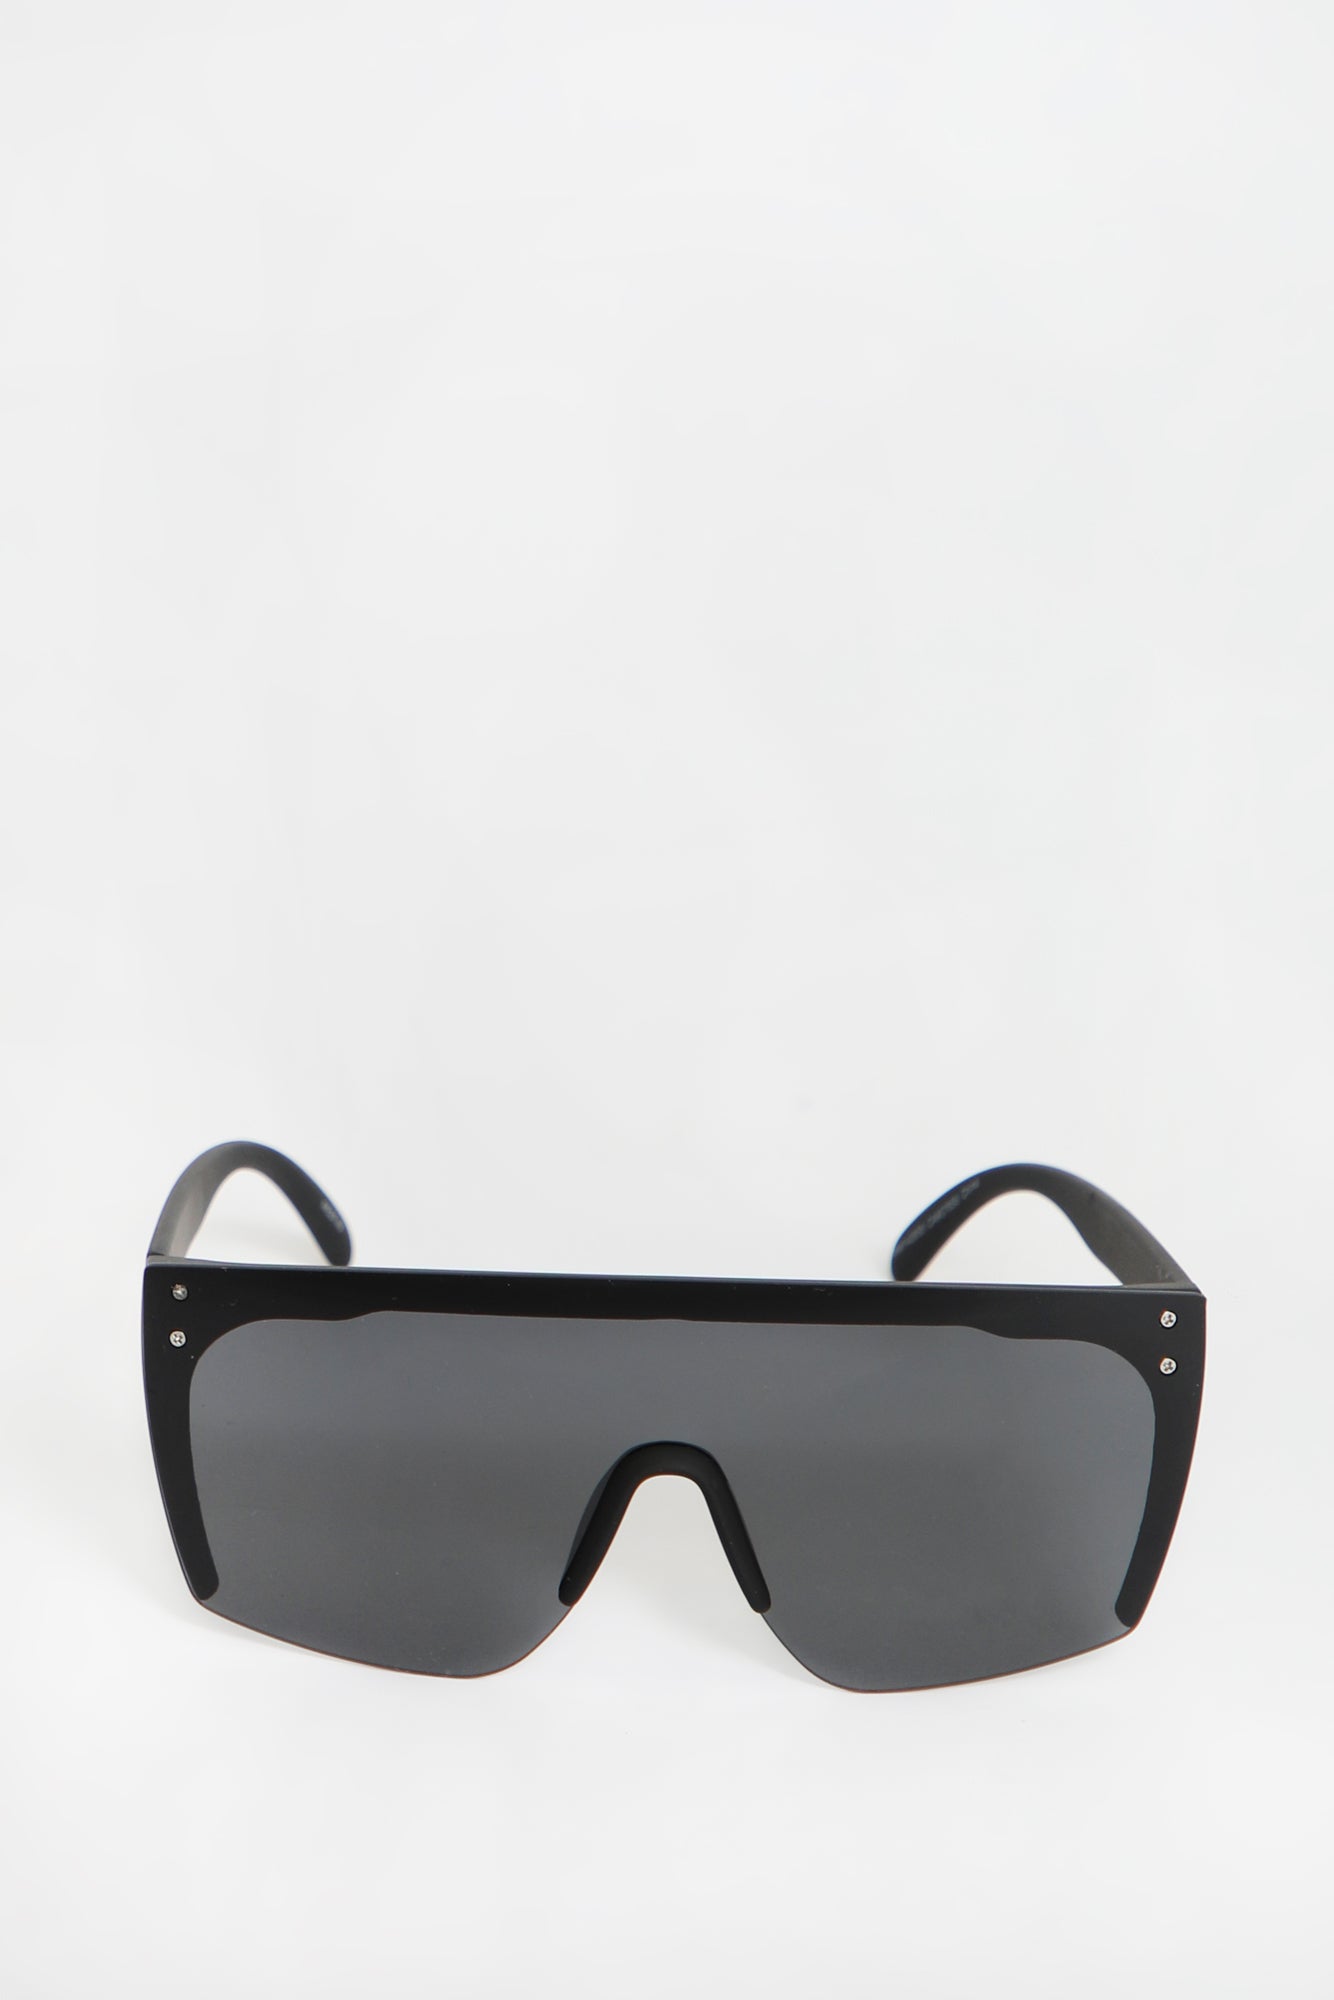 West49 Square Shield Sunglasses - / O/S